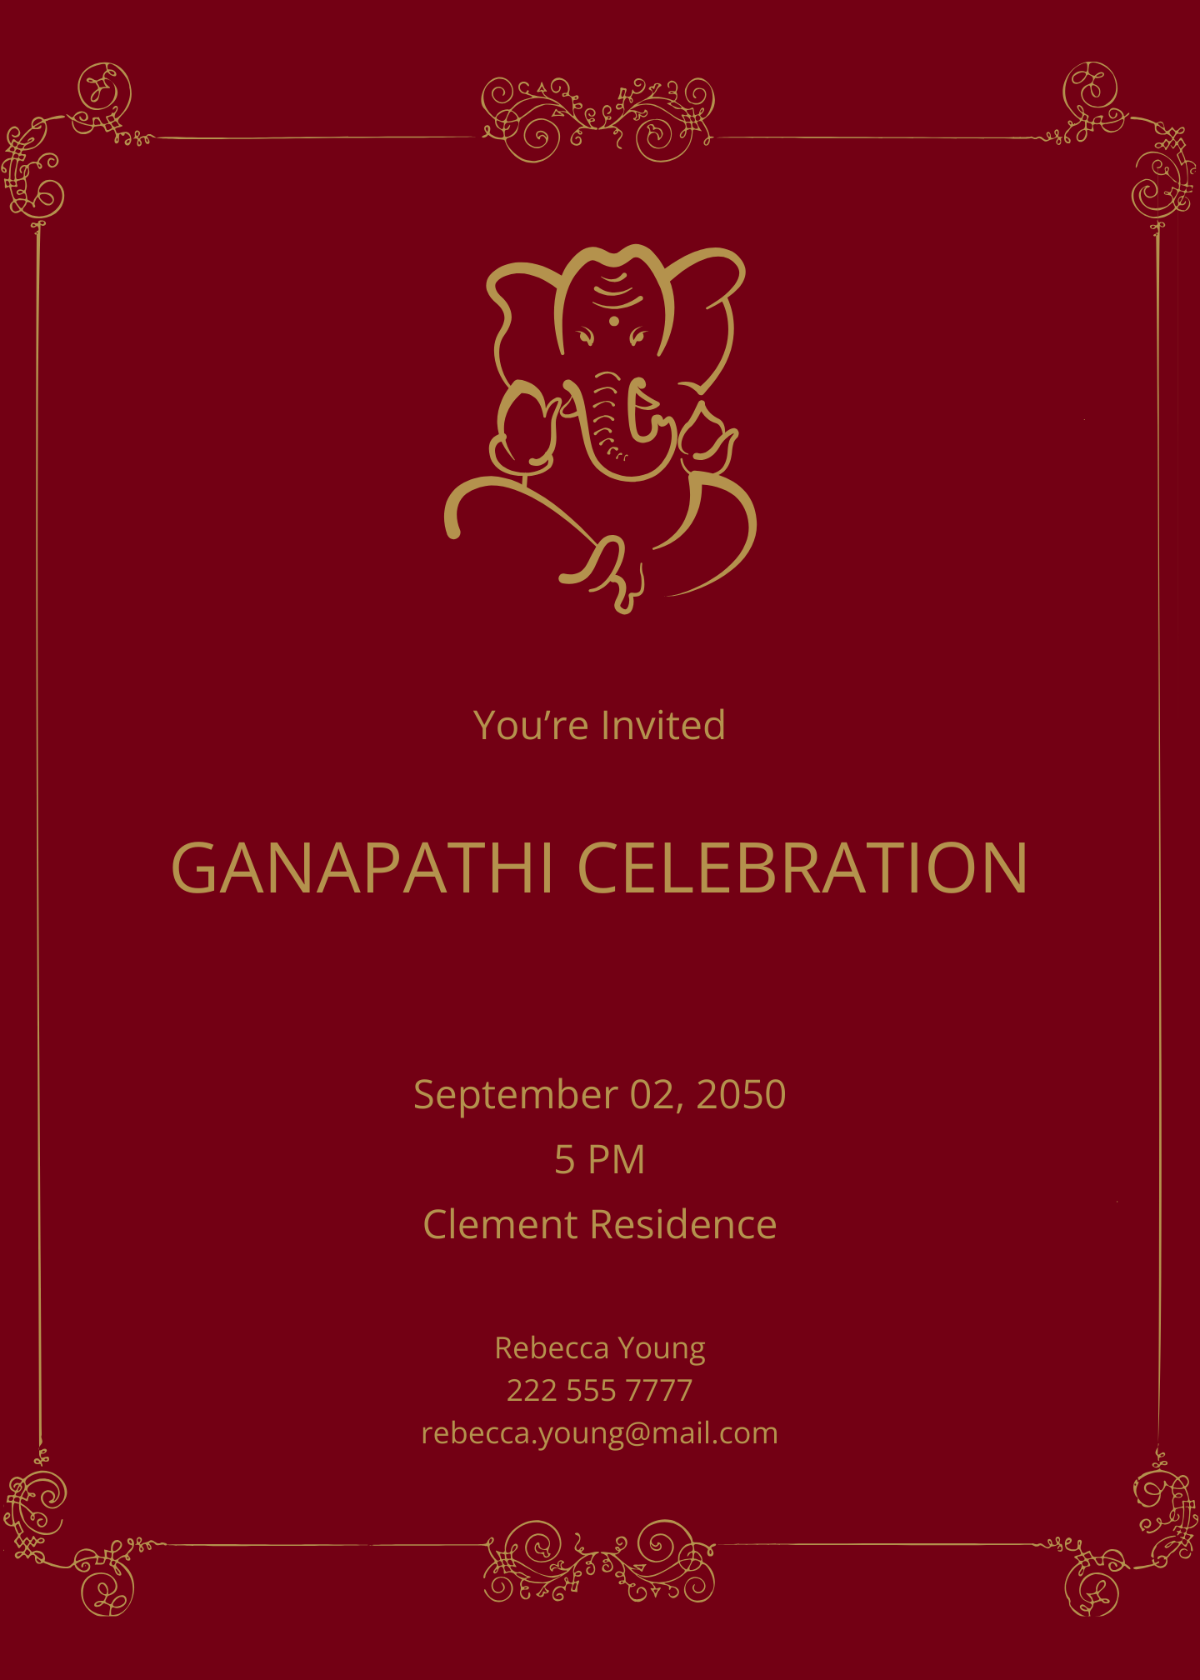 Ganapathi Invitation Card